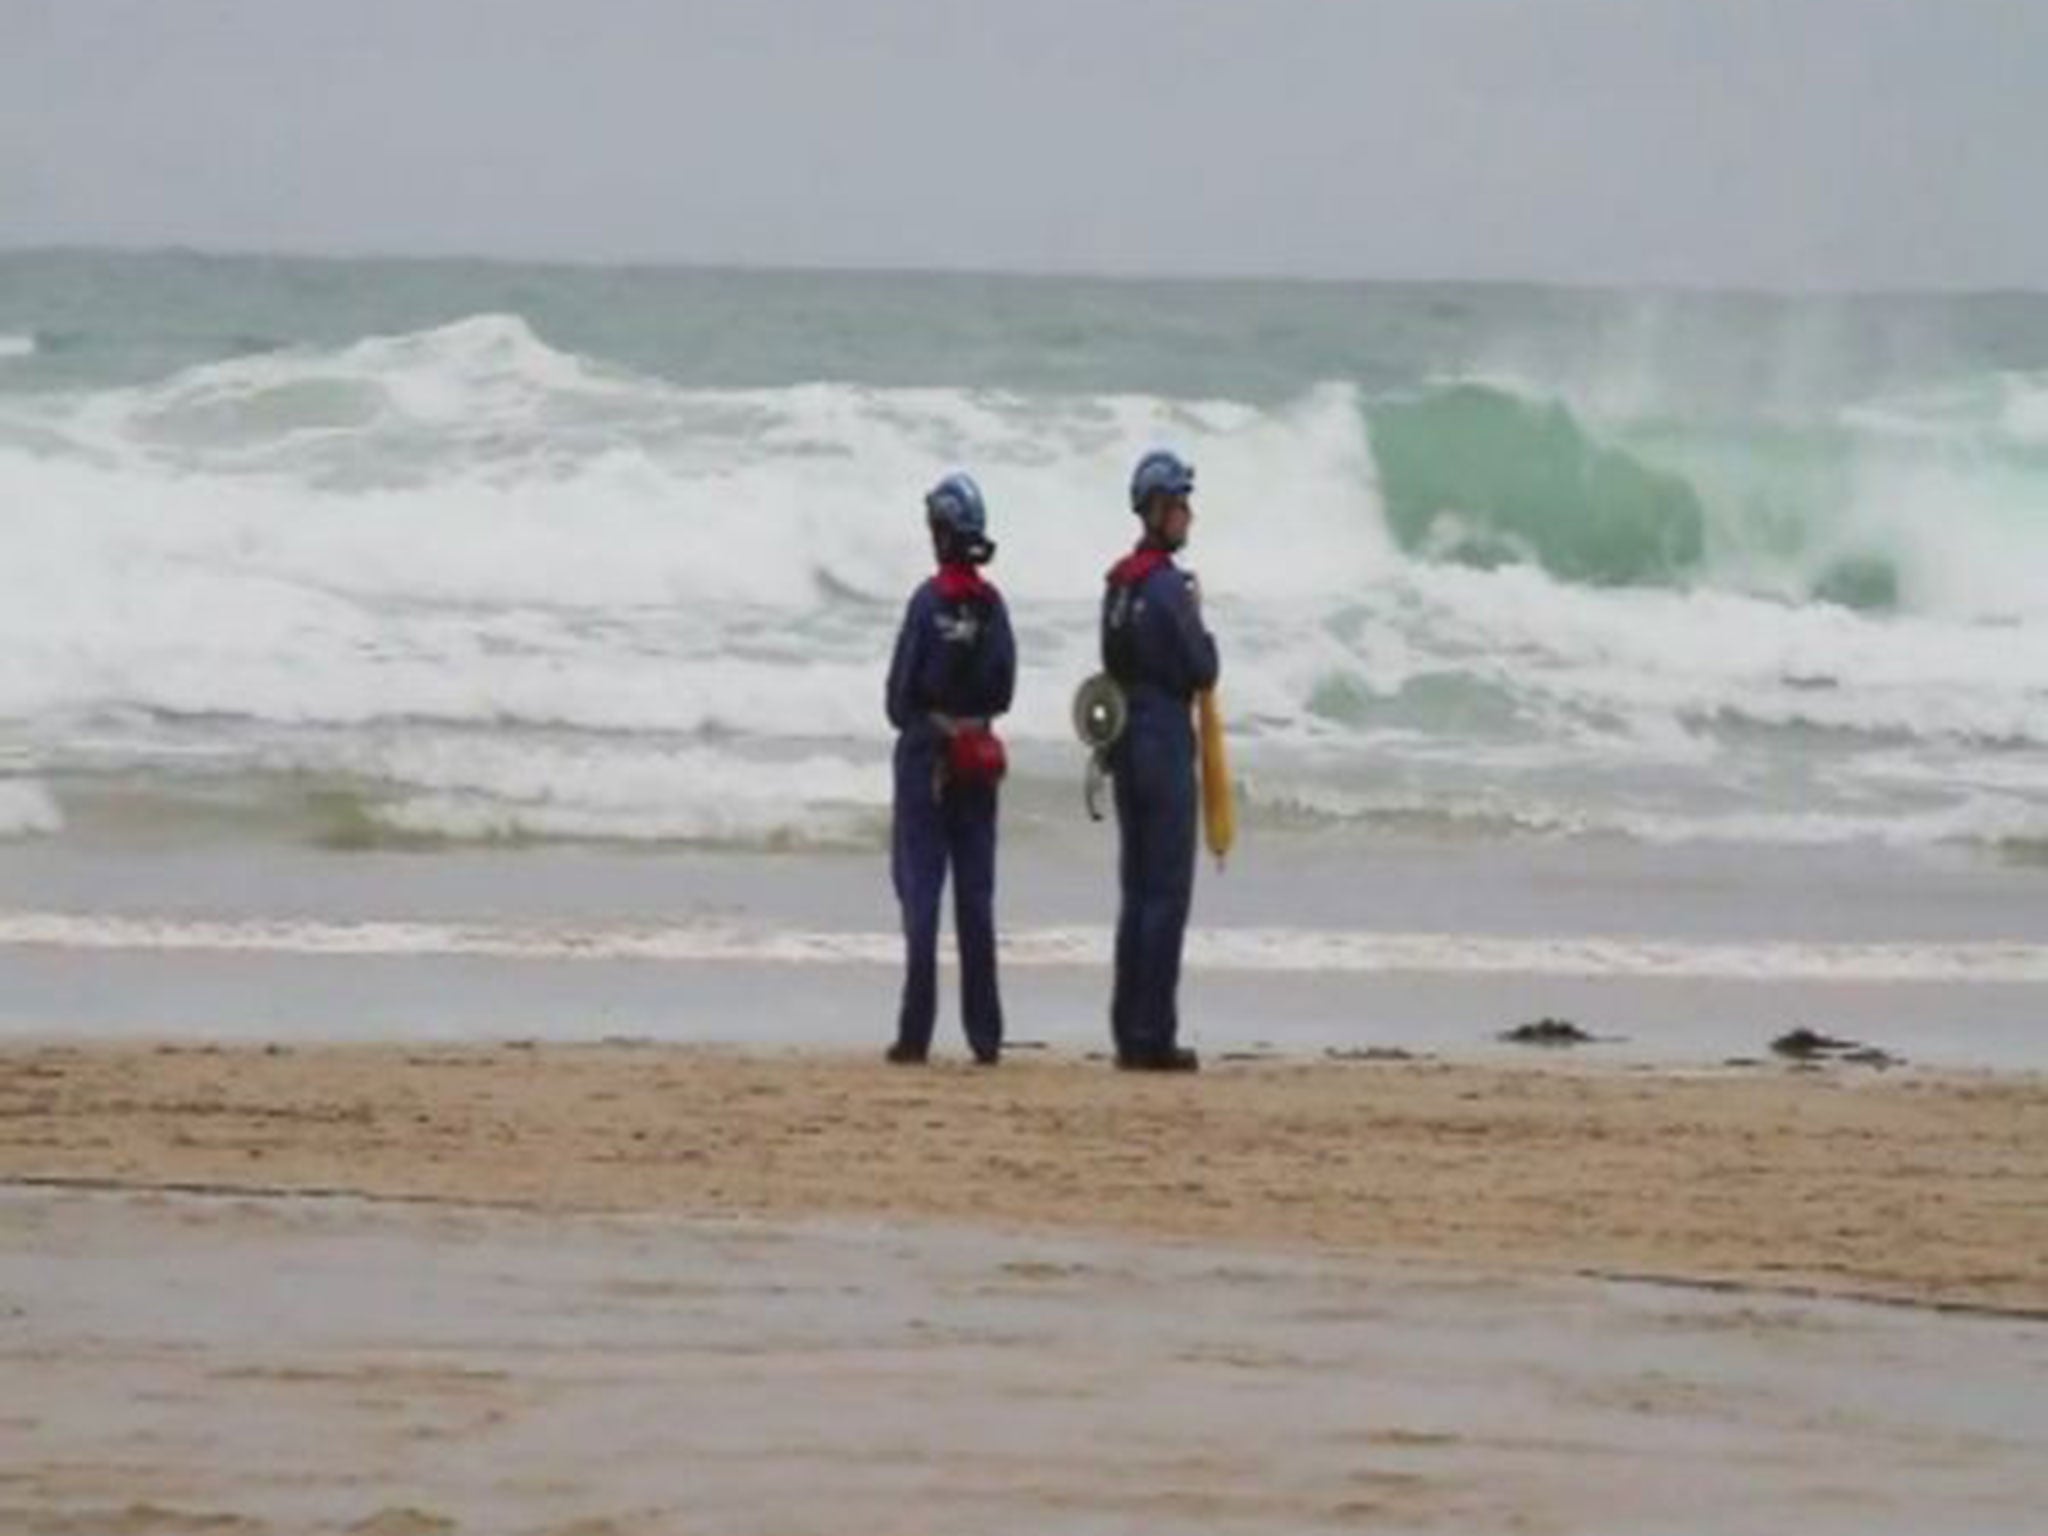 Police and coastguards at Mawgan Porth beach near Newquay, Cornwall